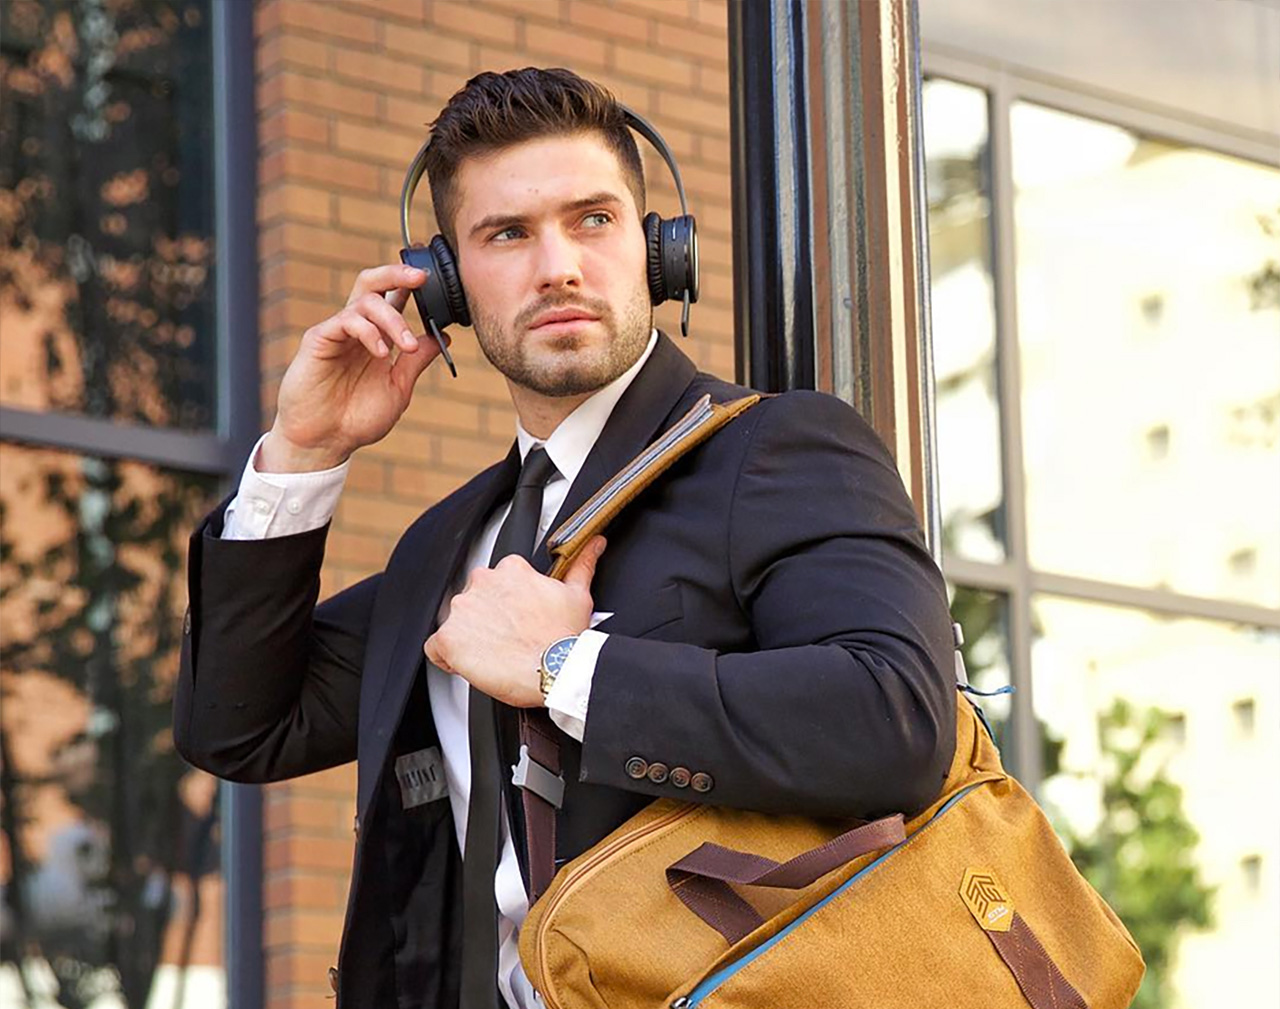 Man in suit, wearing headphones, with STM Goods laptop brief